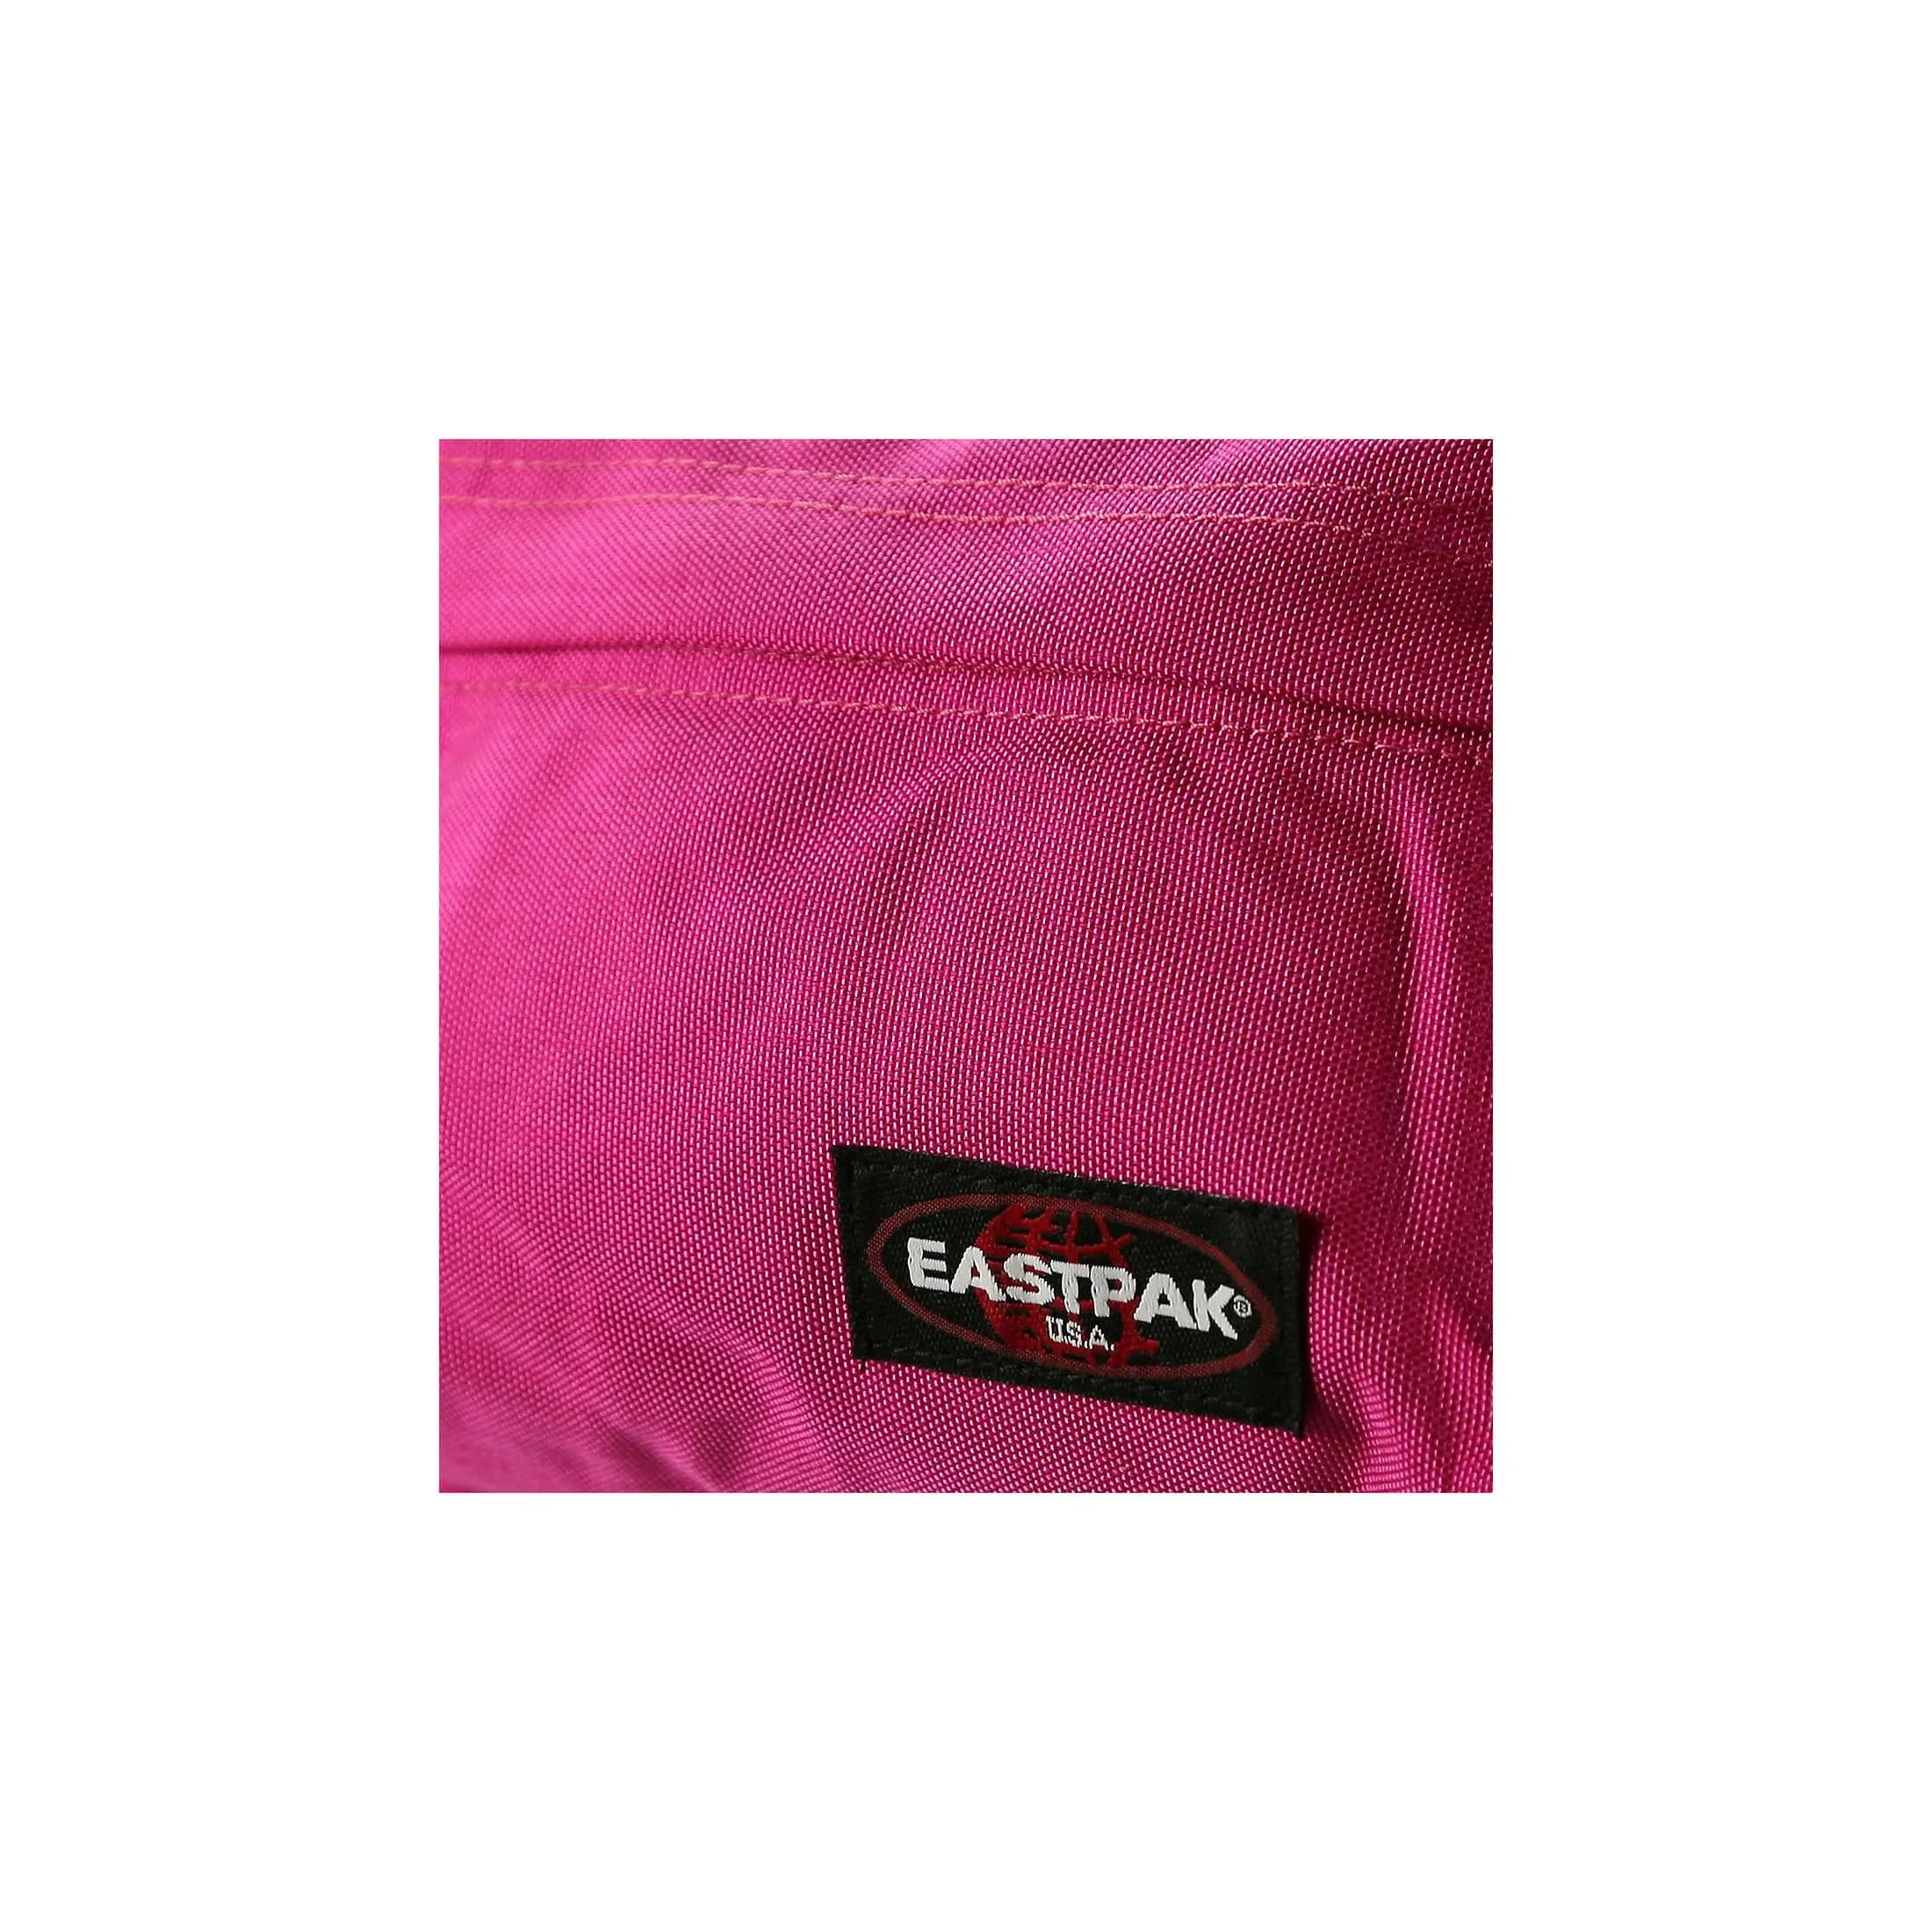 Eastpak Authentic Orbit leisure backpack 33 cm - crafty moss